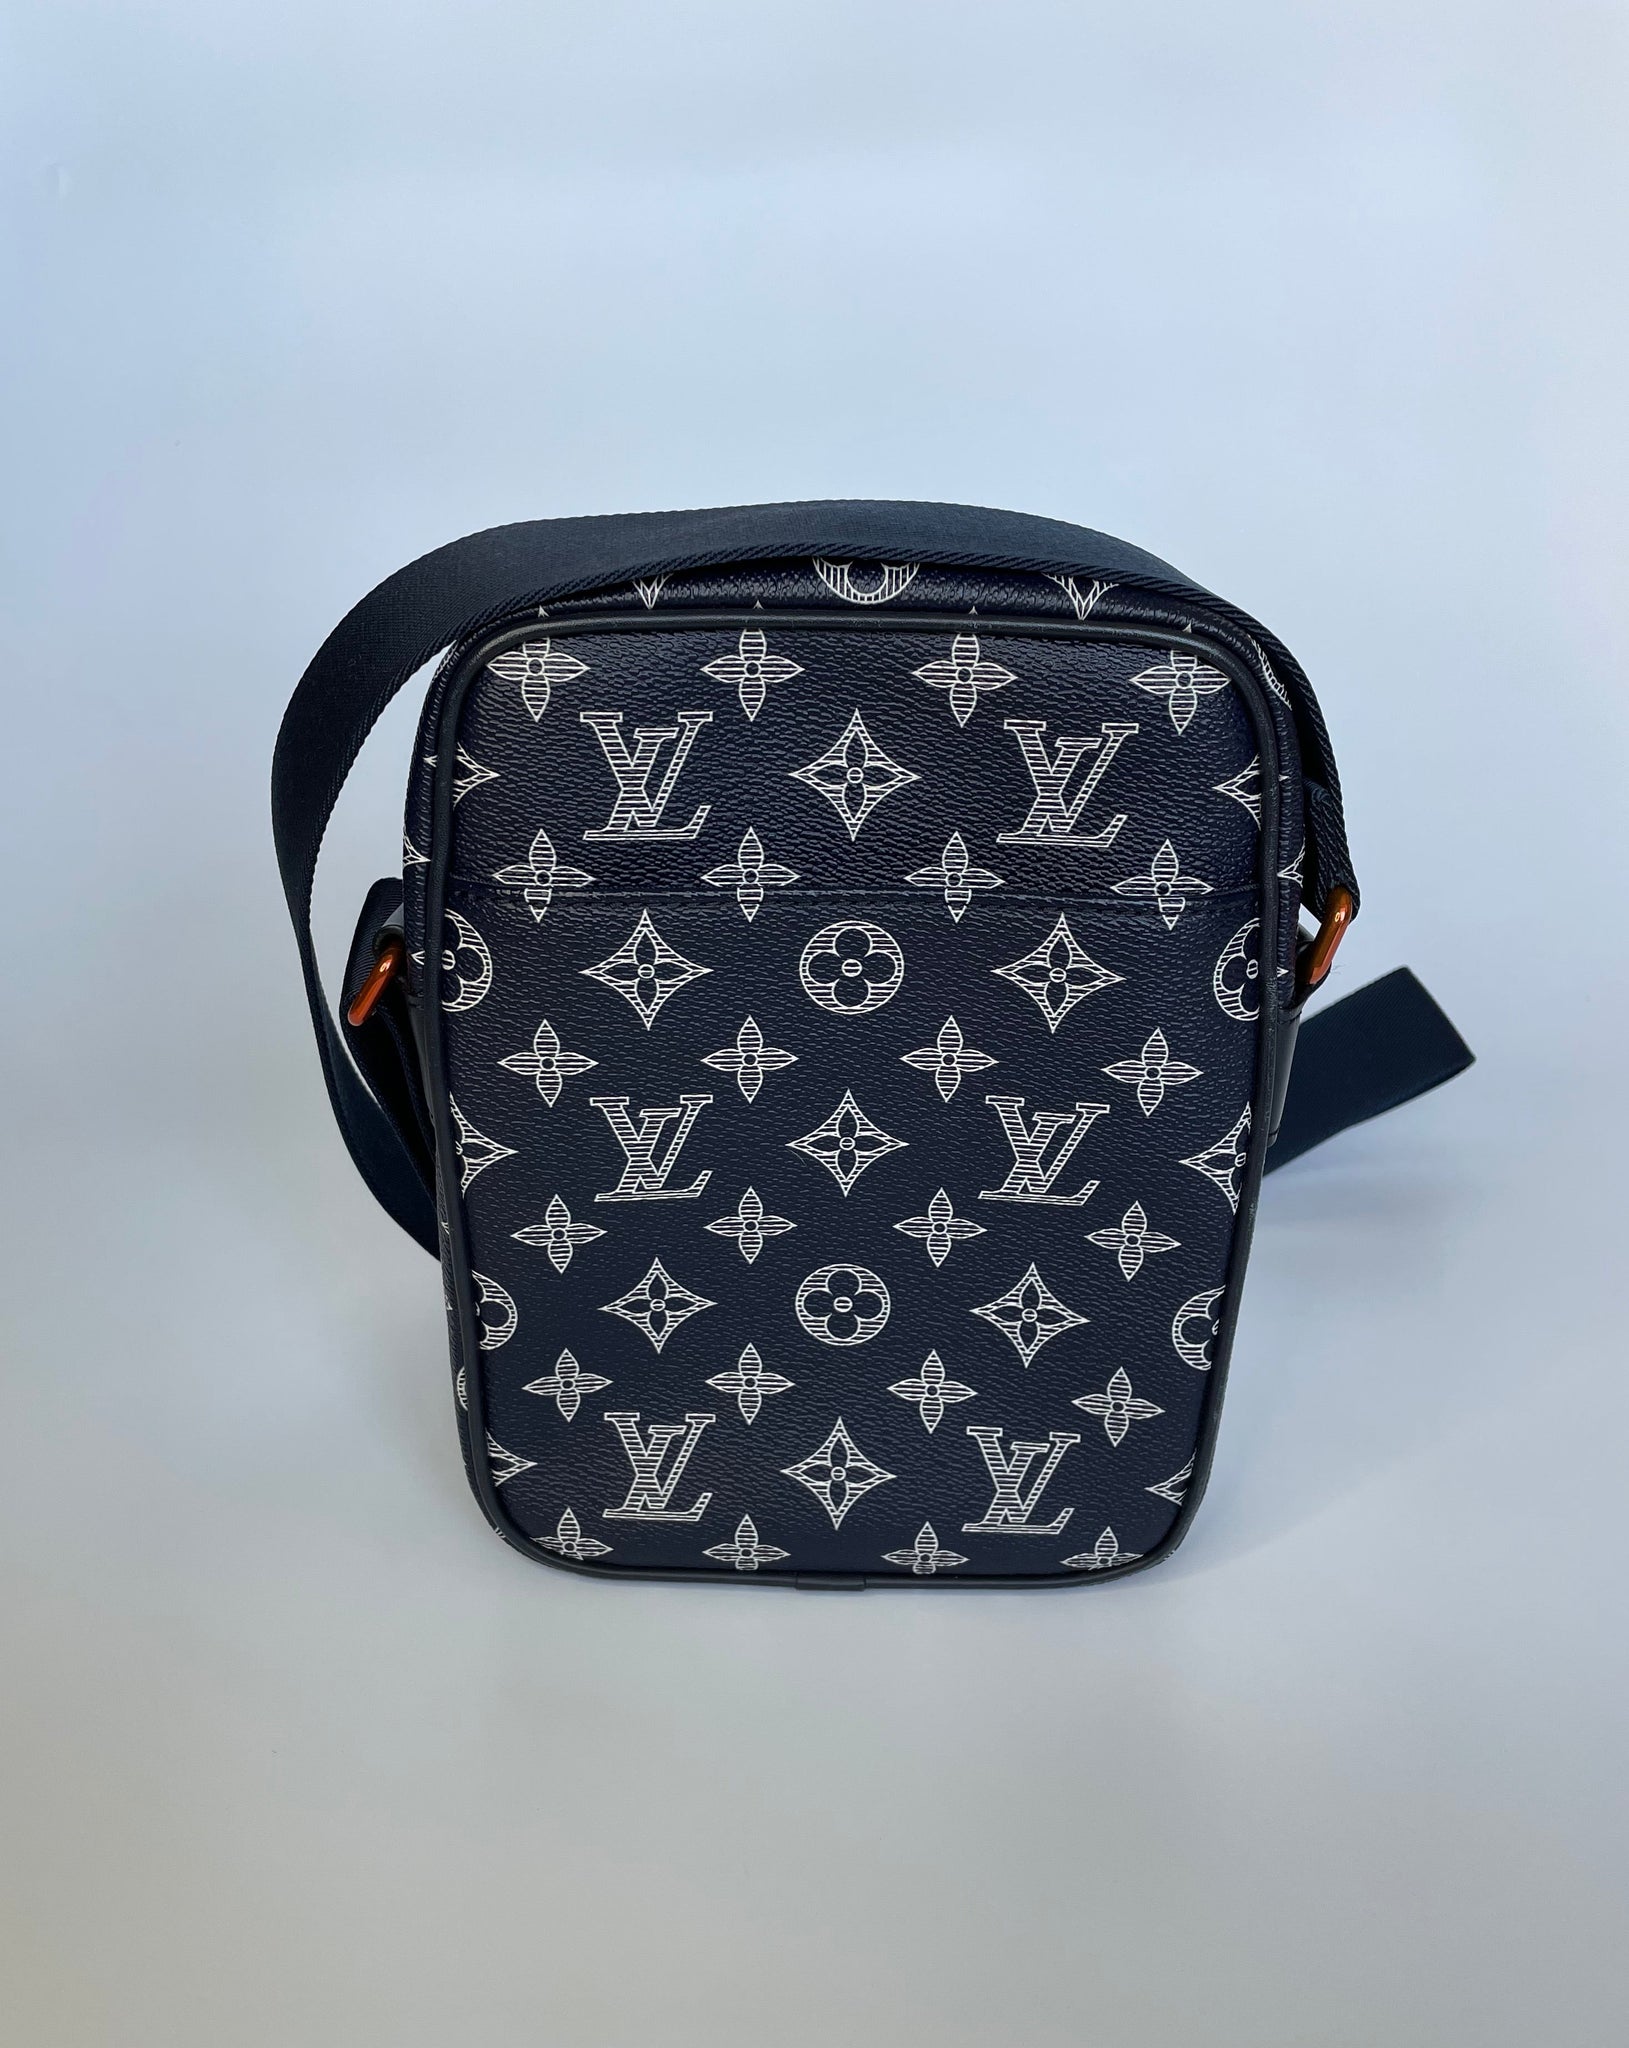 LOUIS VUITTON Monogram Canvas Danube Crossbody Bag Limited Edition